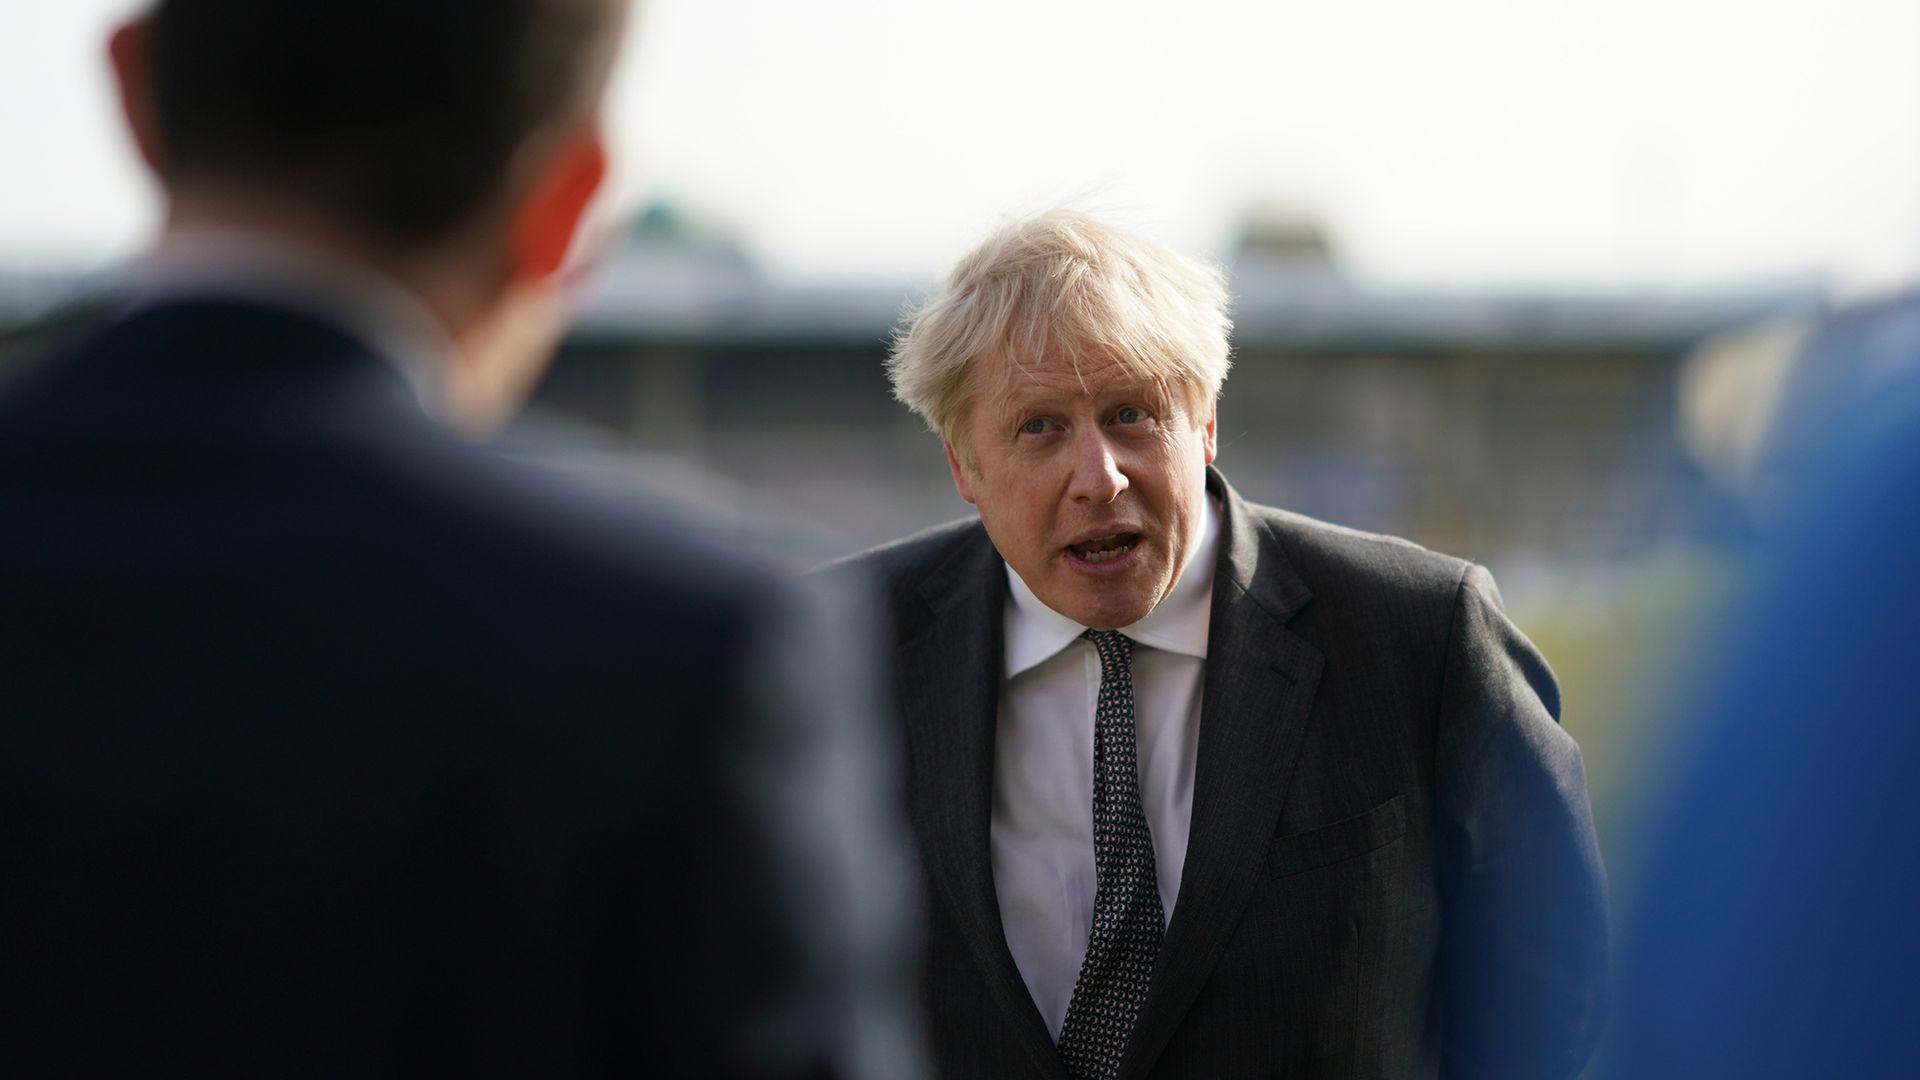 Prime minister Boris Johnson giving a media interview - Credit: PA